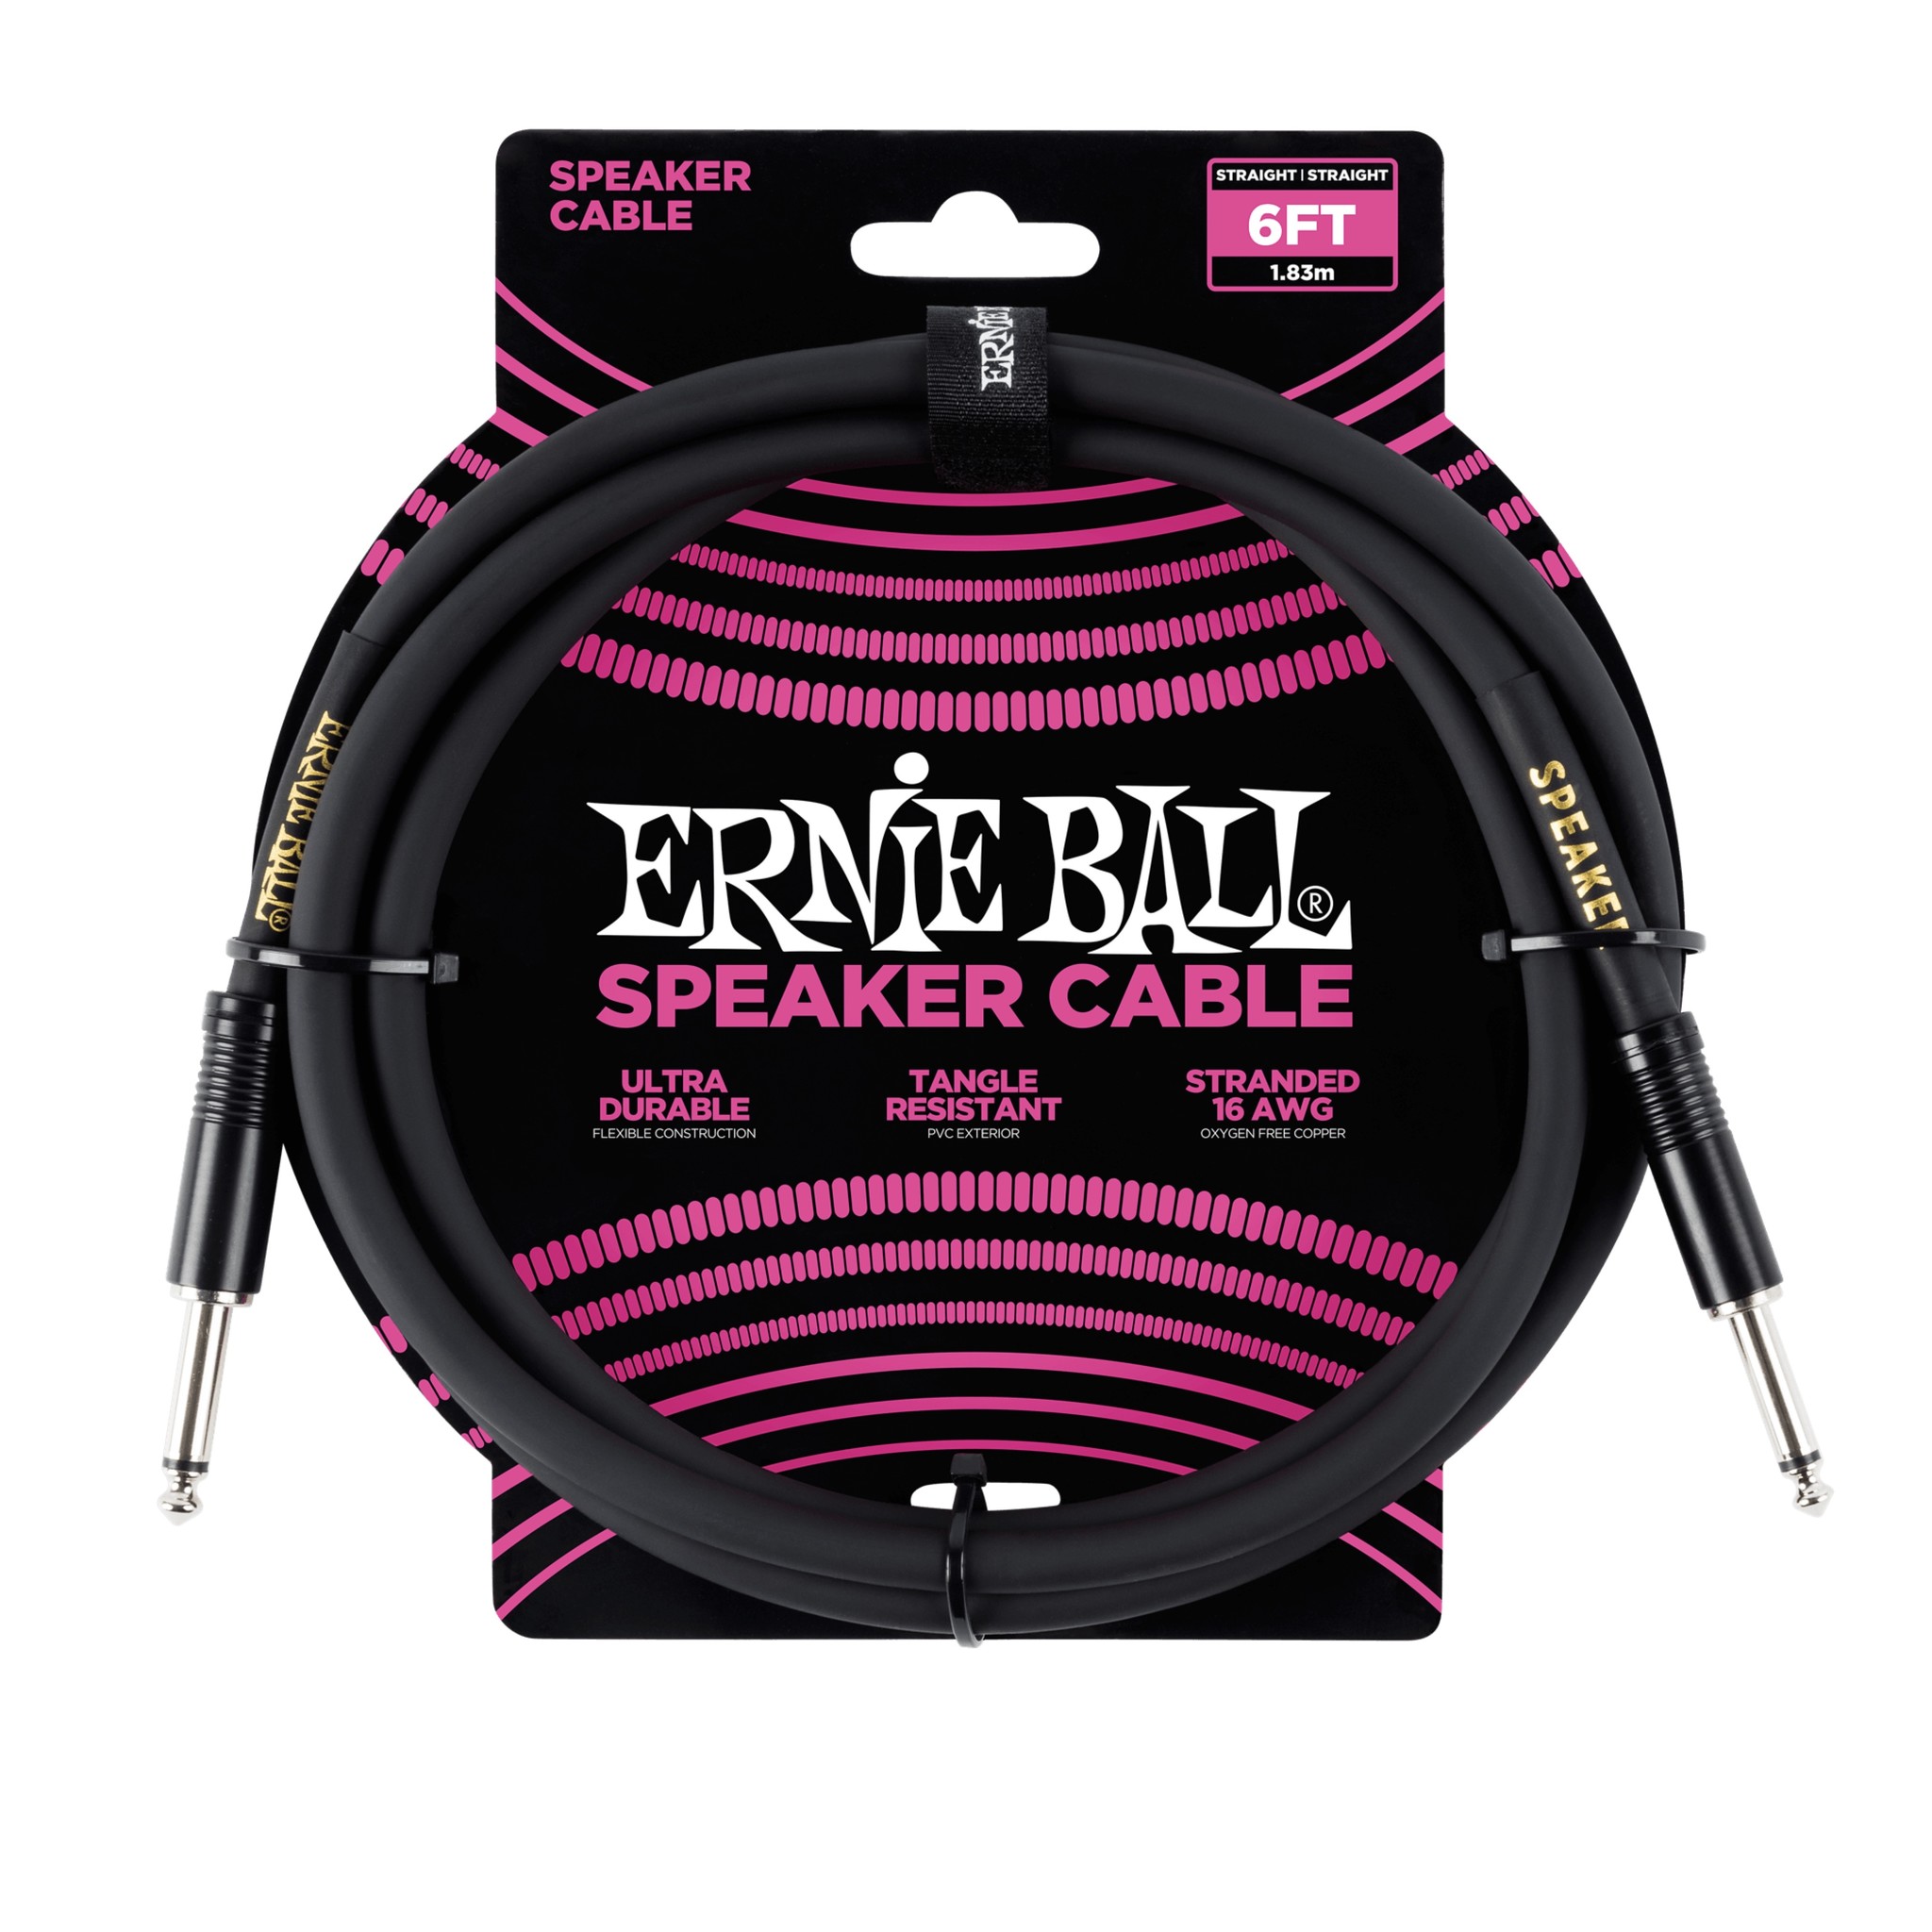 Ernie Ball 6' Straight / Straight Speaker Cable, Black (6-Foot)